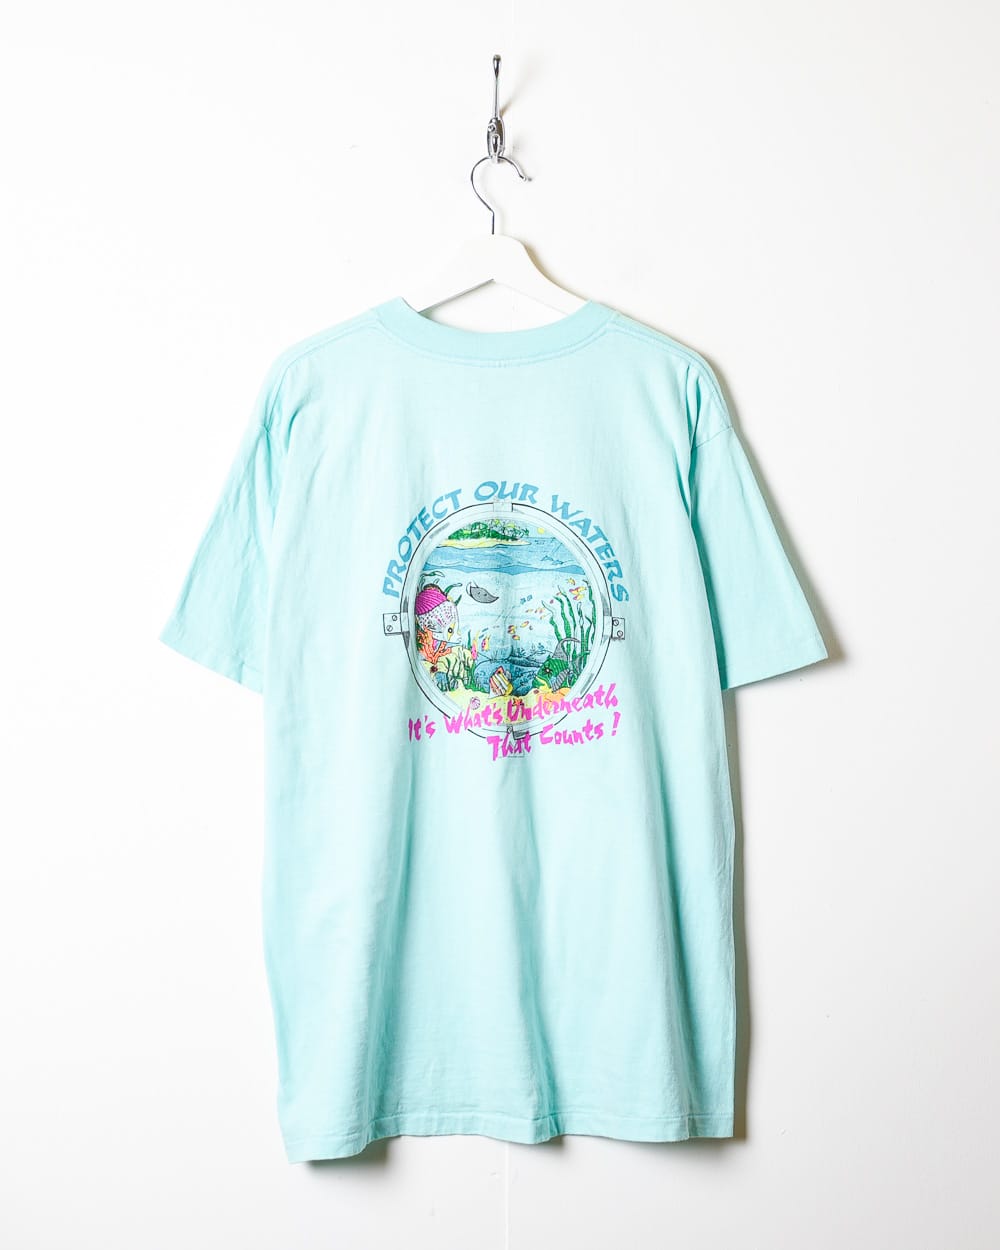 BabyBlue South Bay Cove Marina Single Stitch T-Shirt - X-Large